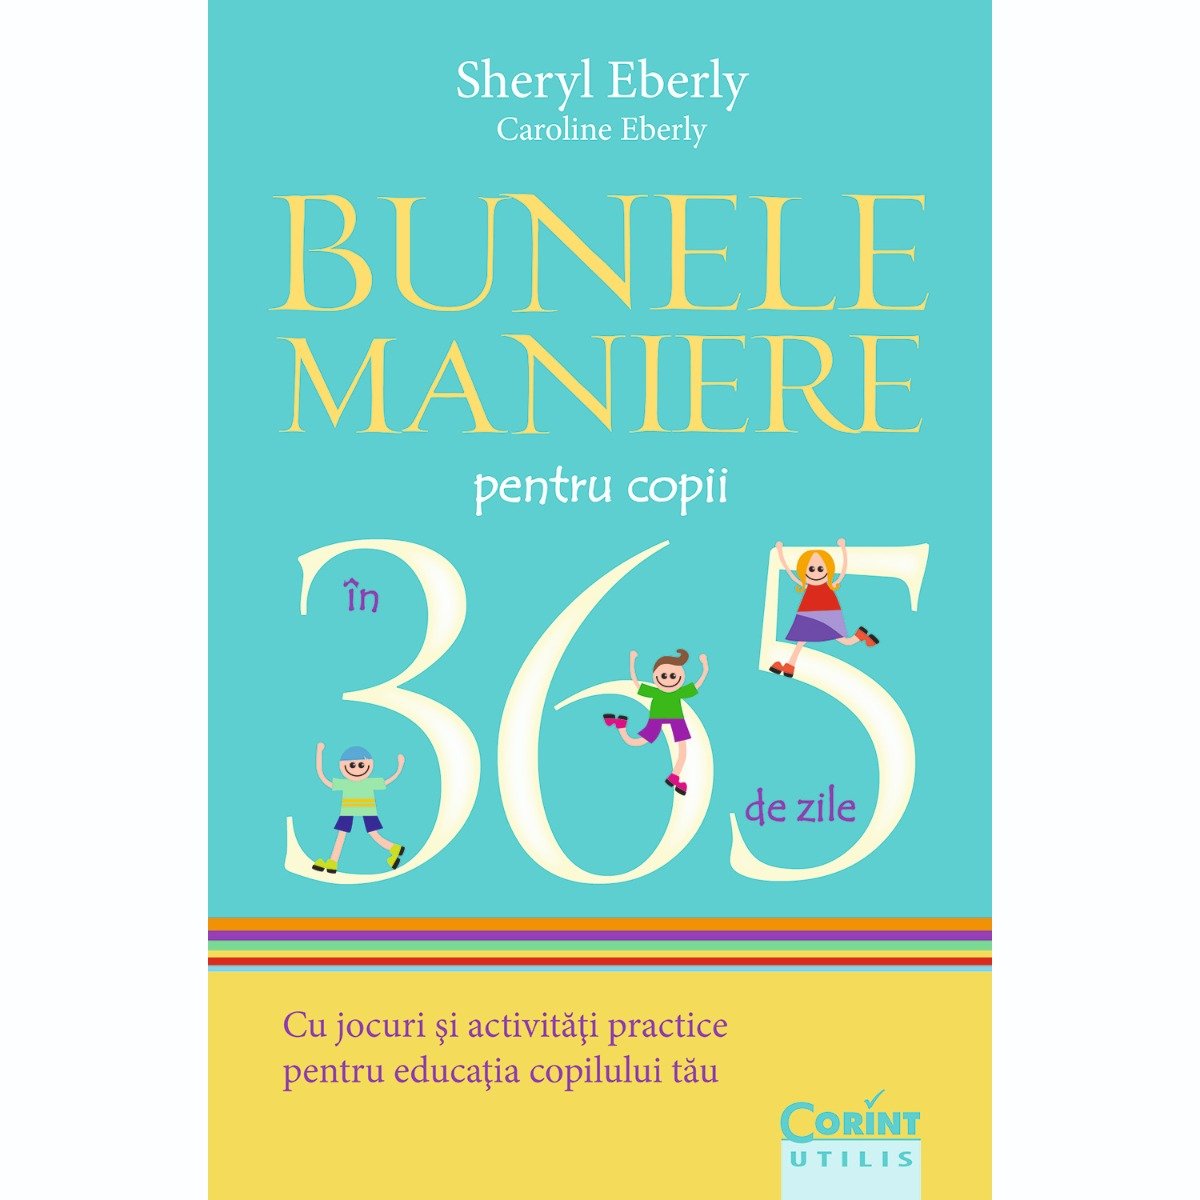 Bunele maniere pentru copii in 365 de zile, Sheryl Eberly, Caroline Eberly, 2014